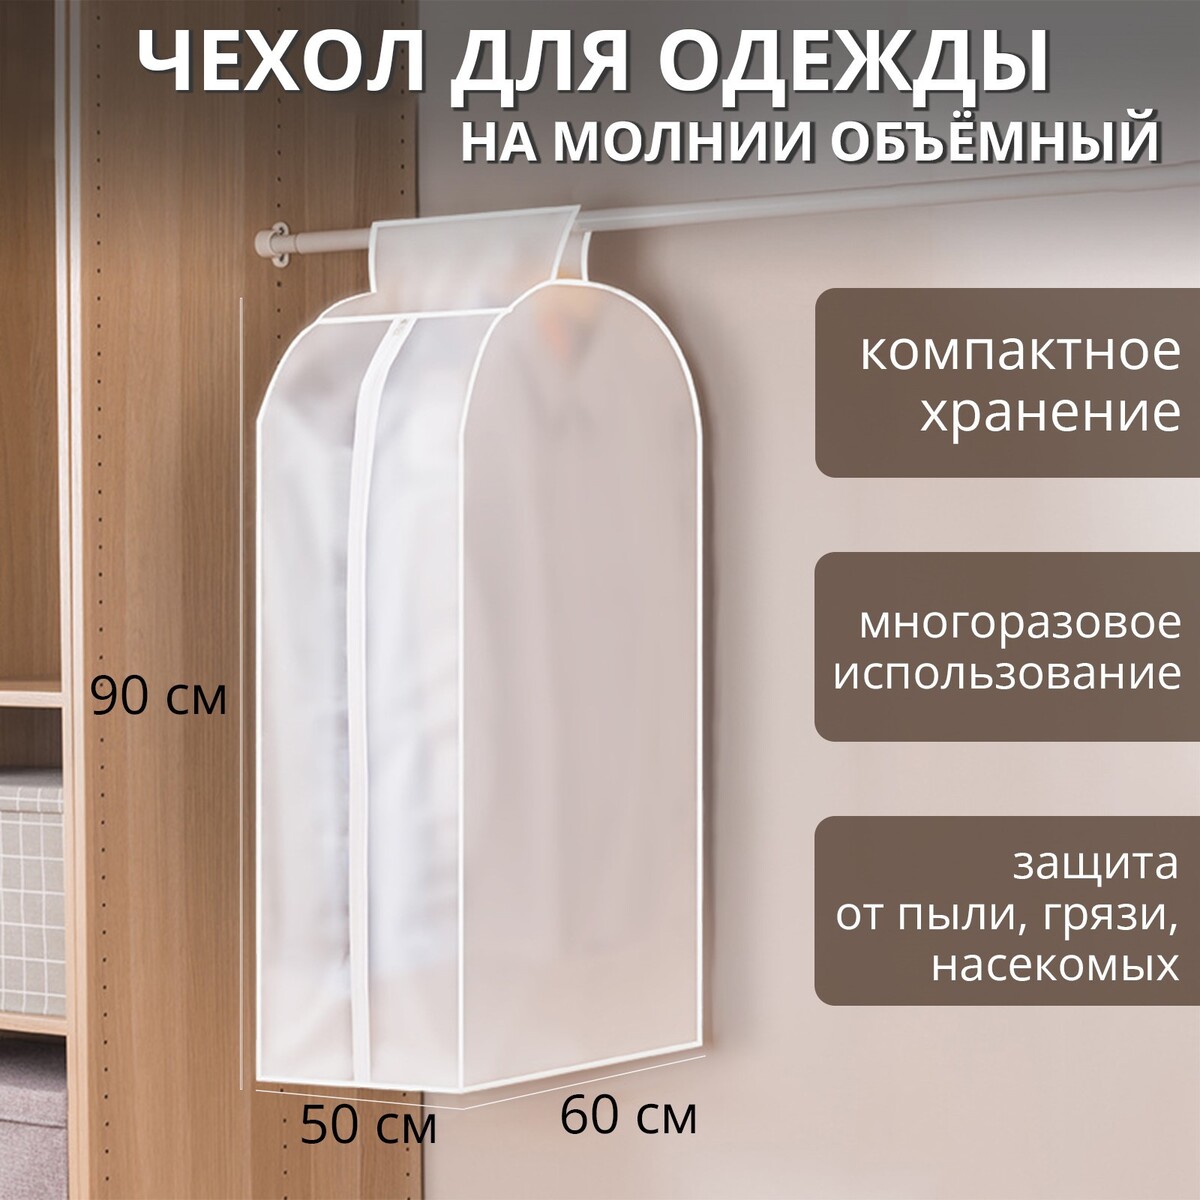 Чехол для одежды плотный доляна, 60×90×30 см, peva, цвет белый чехол для одежды ladо́m 60×90 см плотный peva серый